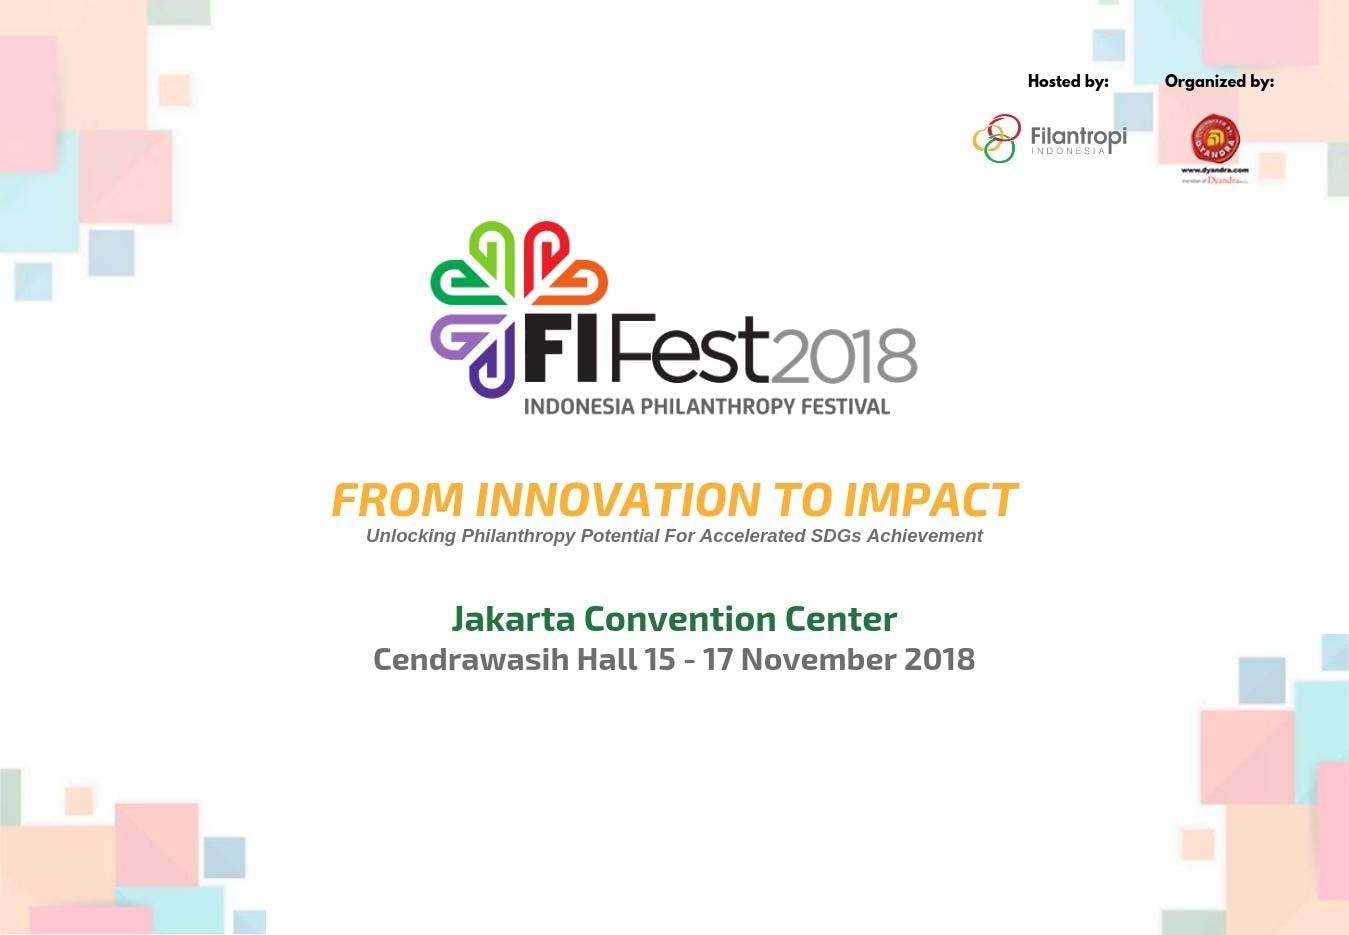 FILANTROPI INDONESIA FESTIVAL - FIFEST 2018